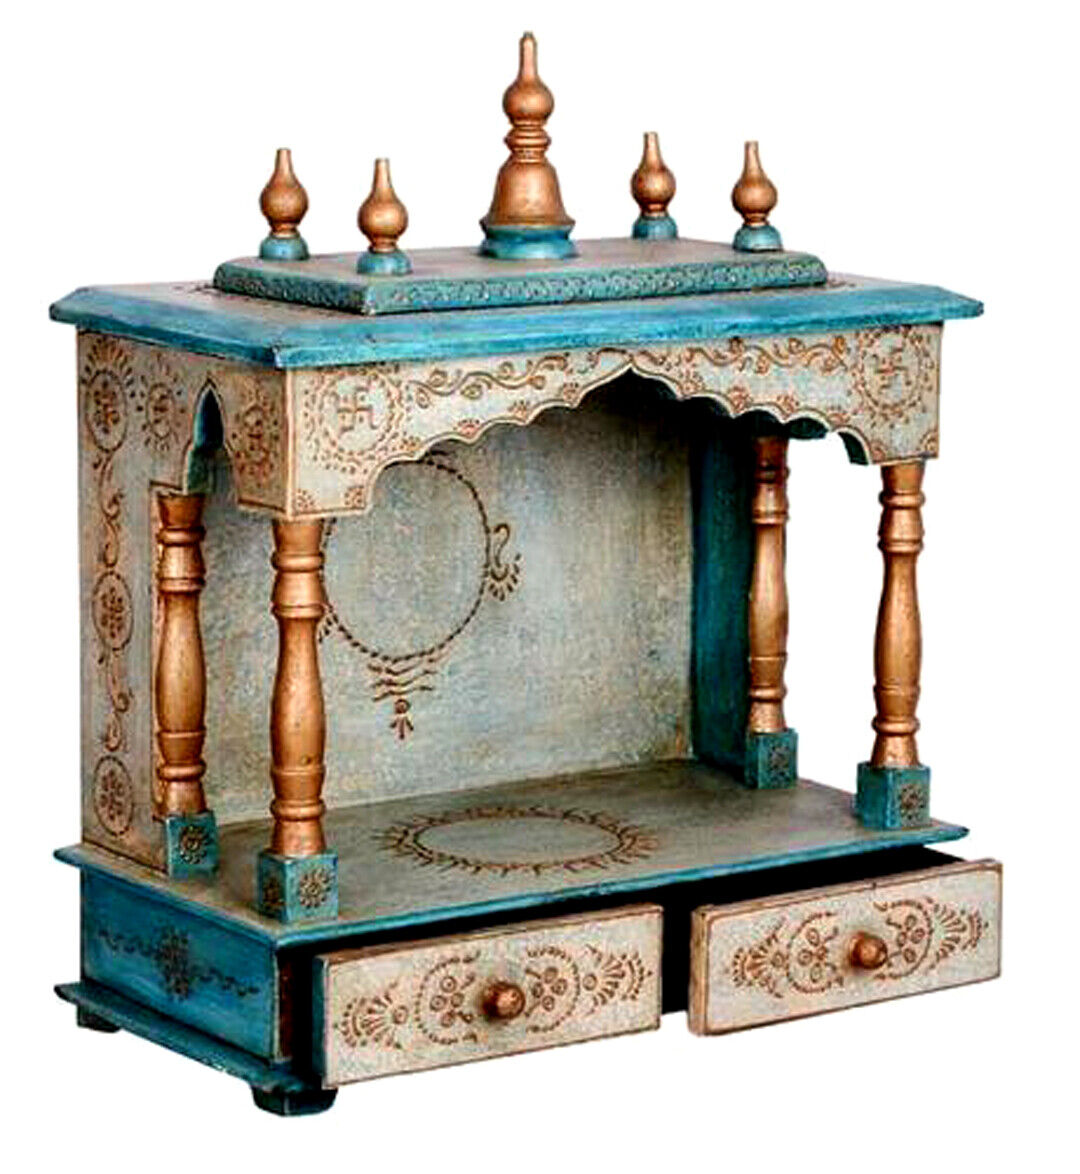  Mandir Pooja Ghar Mandapam for Worship Hawan Wooden Handcrafted Hindu Temple522